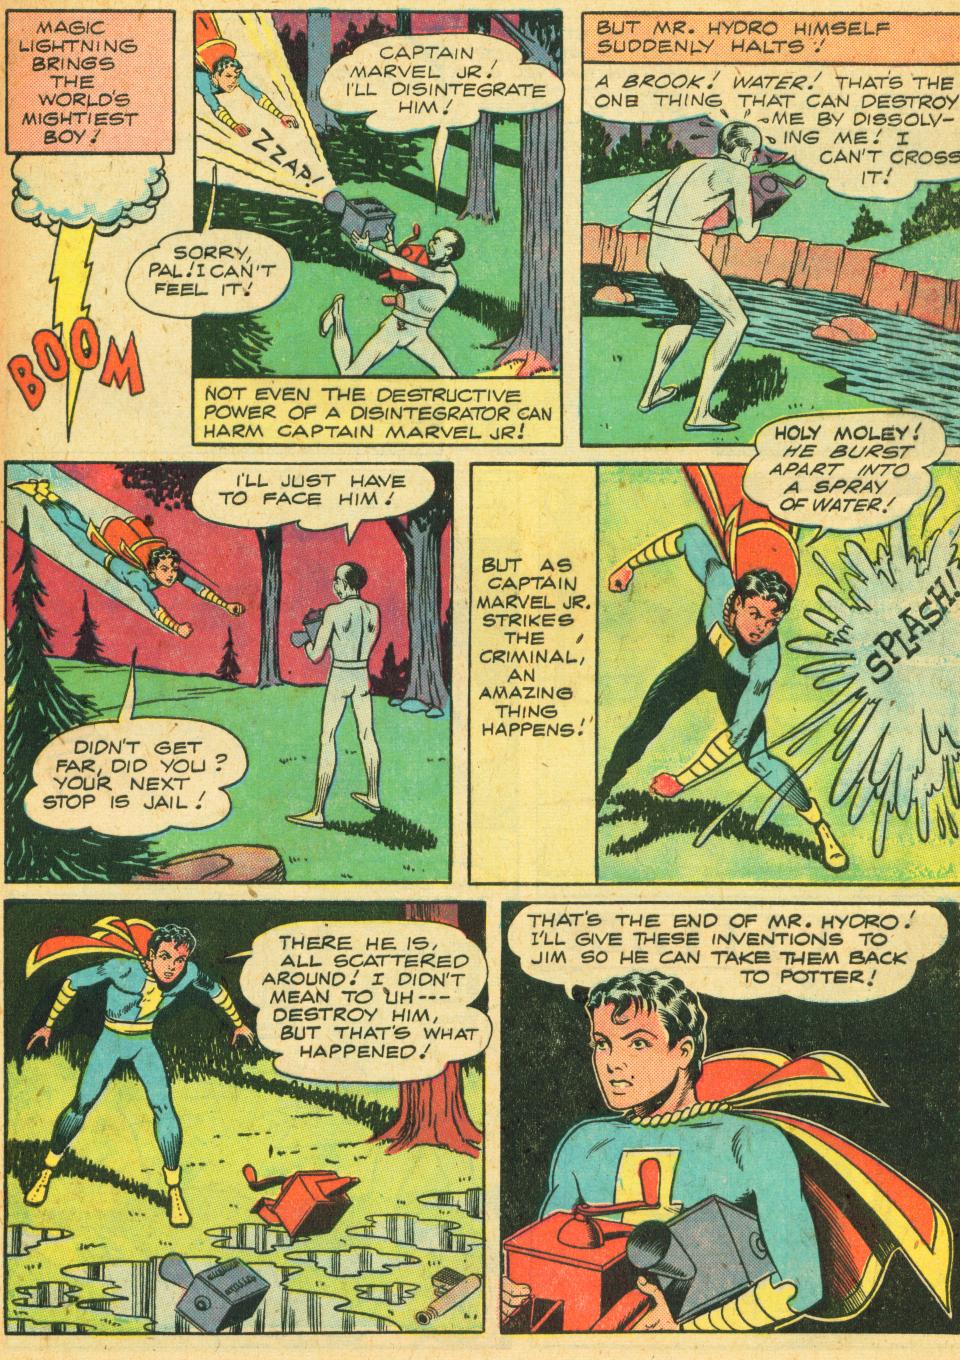 Read online Captain Marvel, Jr. comic -  Issue #62 - 8